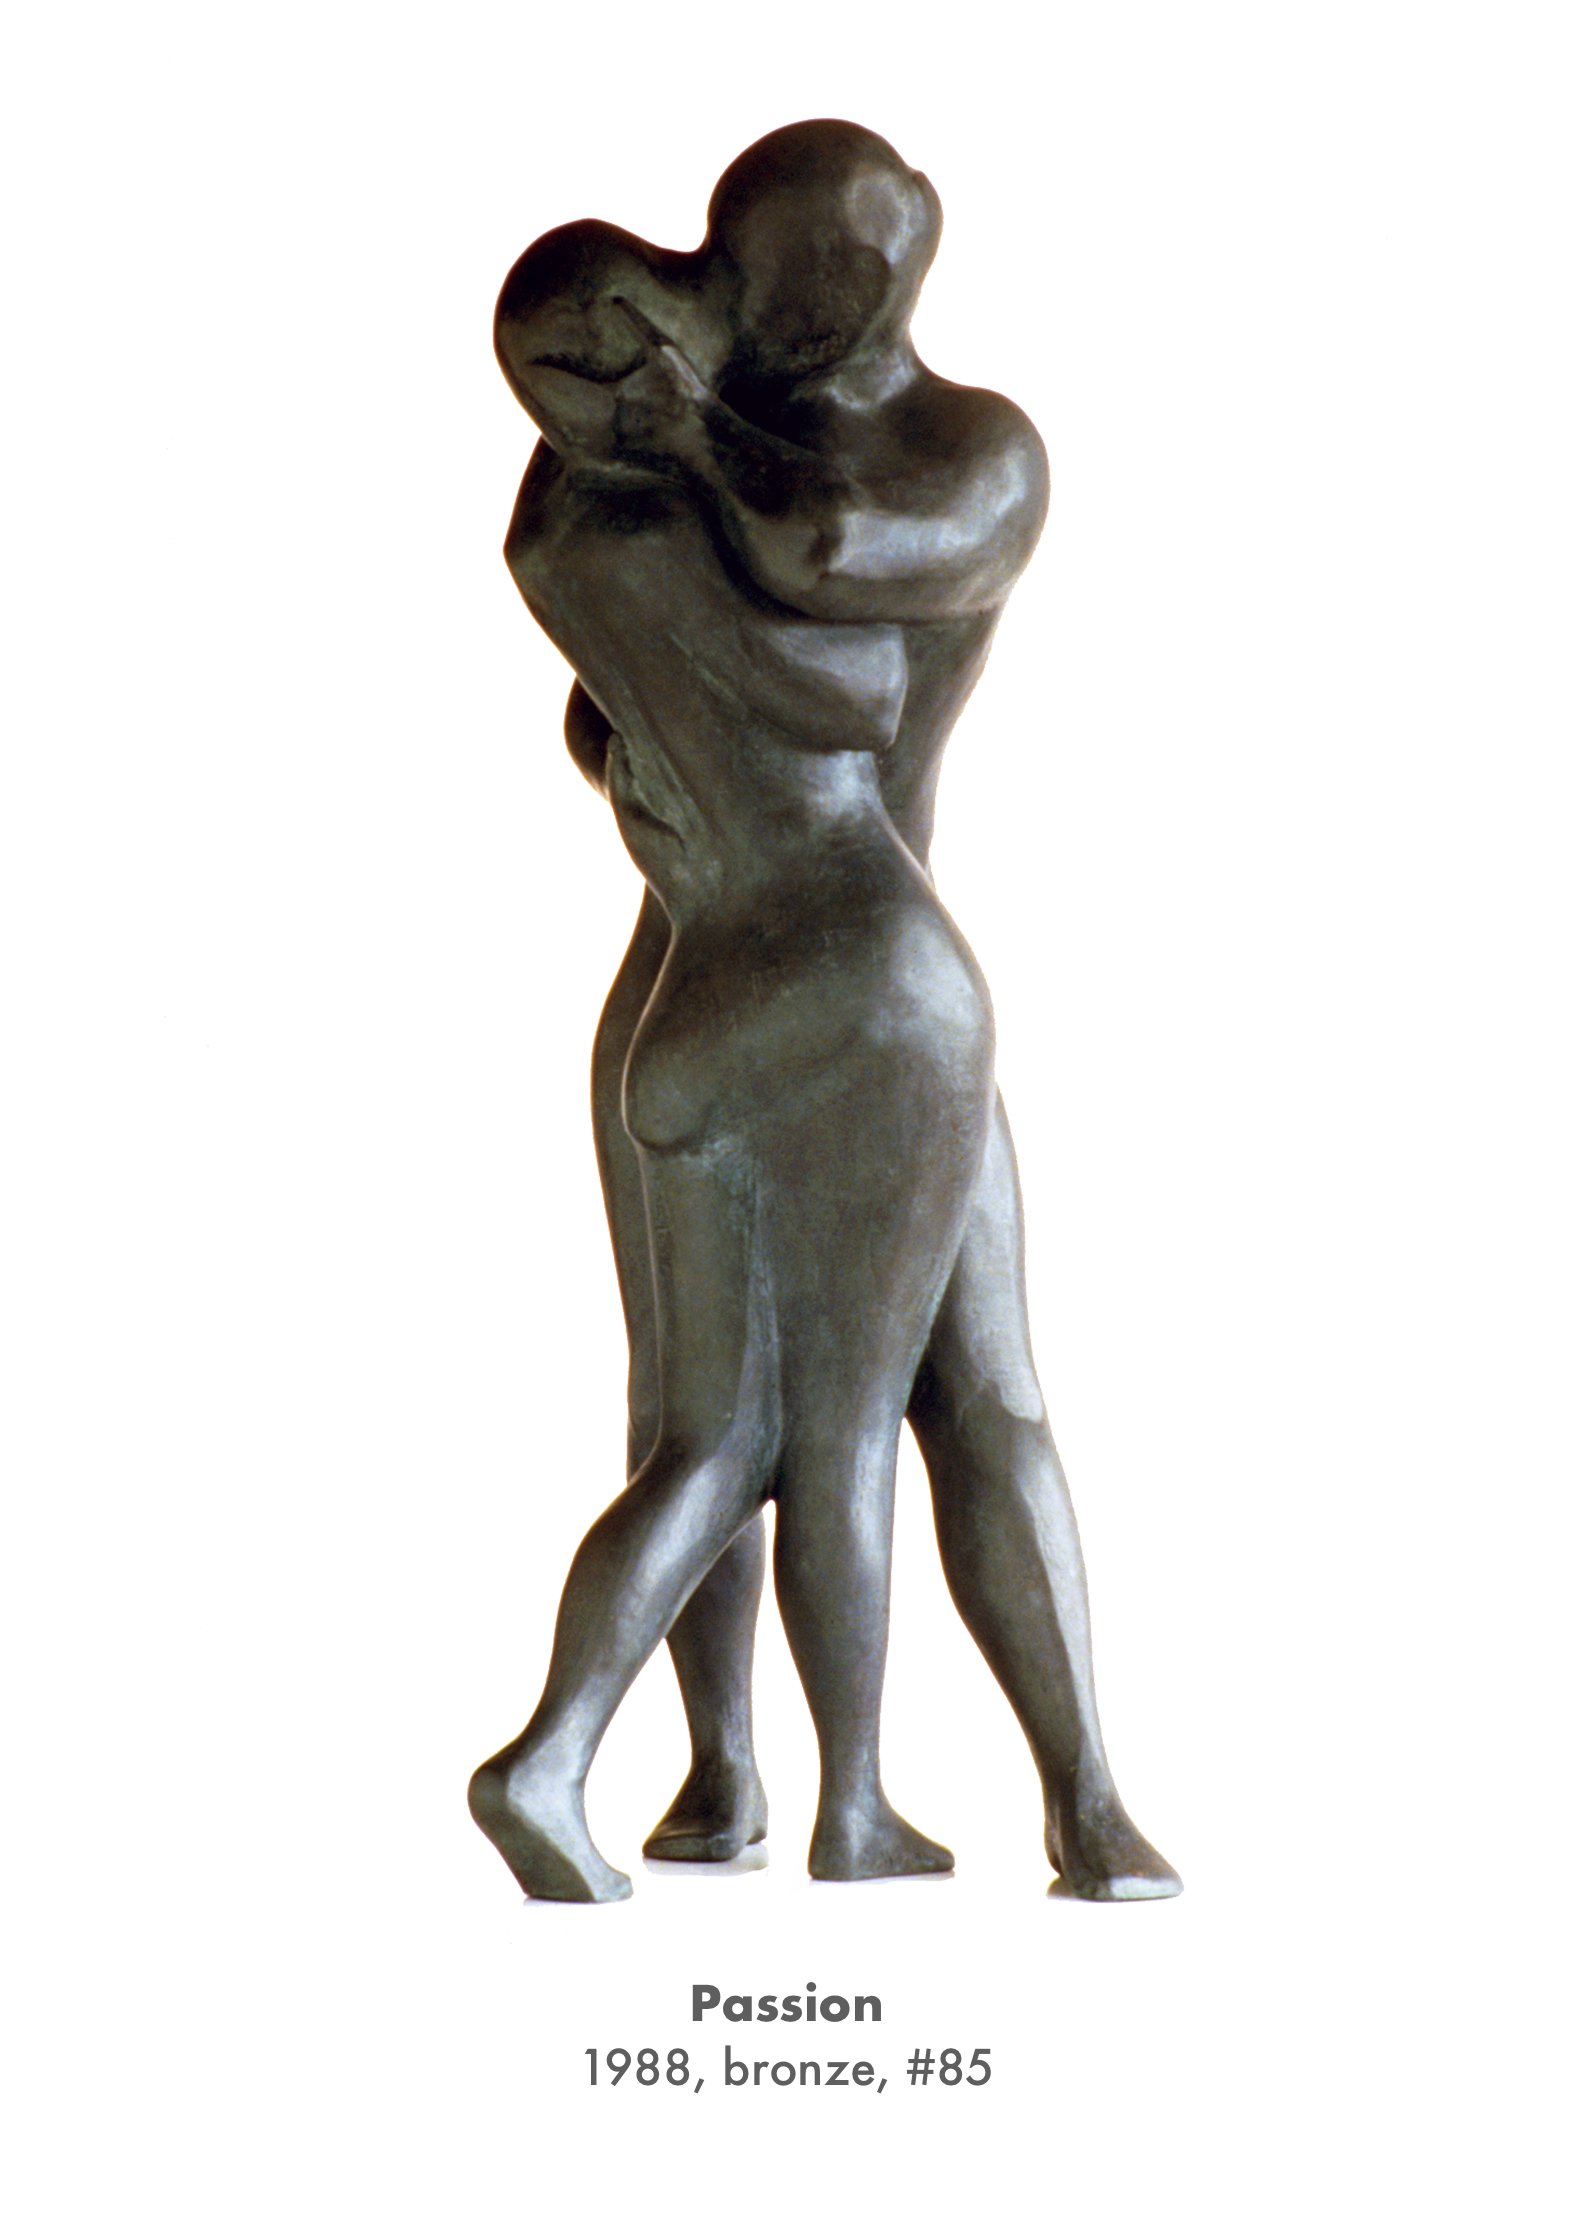 Passion, 1988, bronze, #85